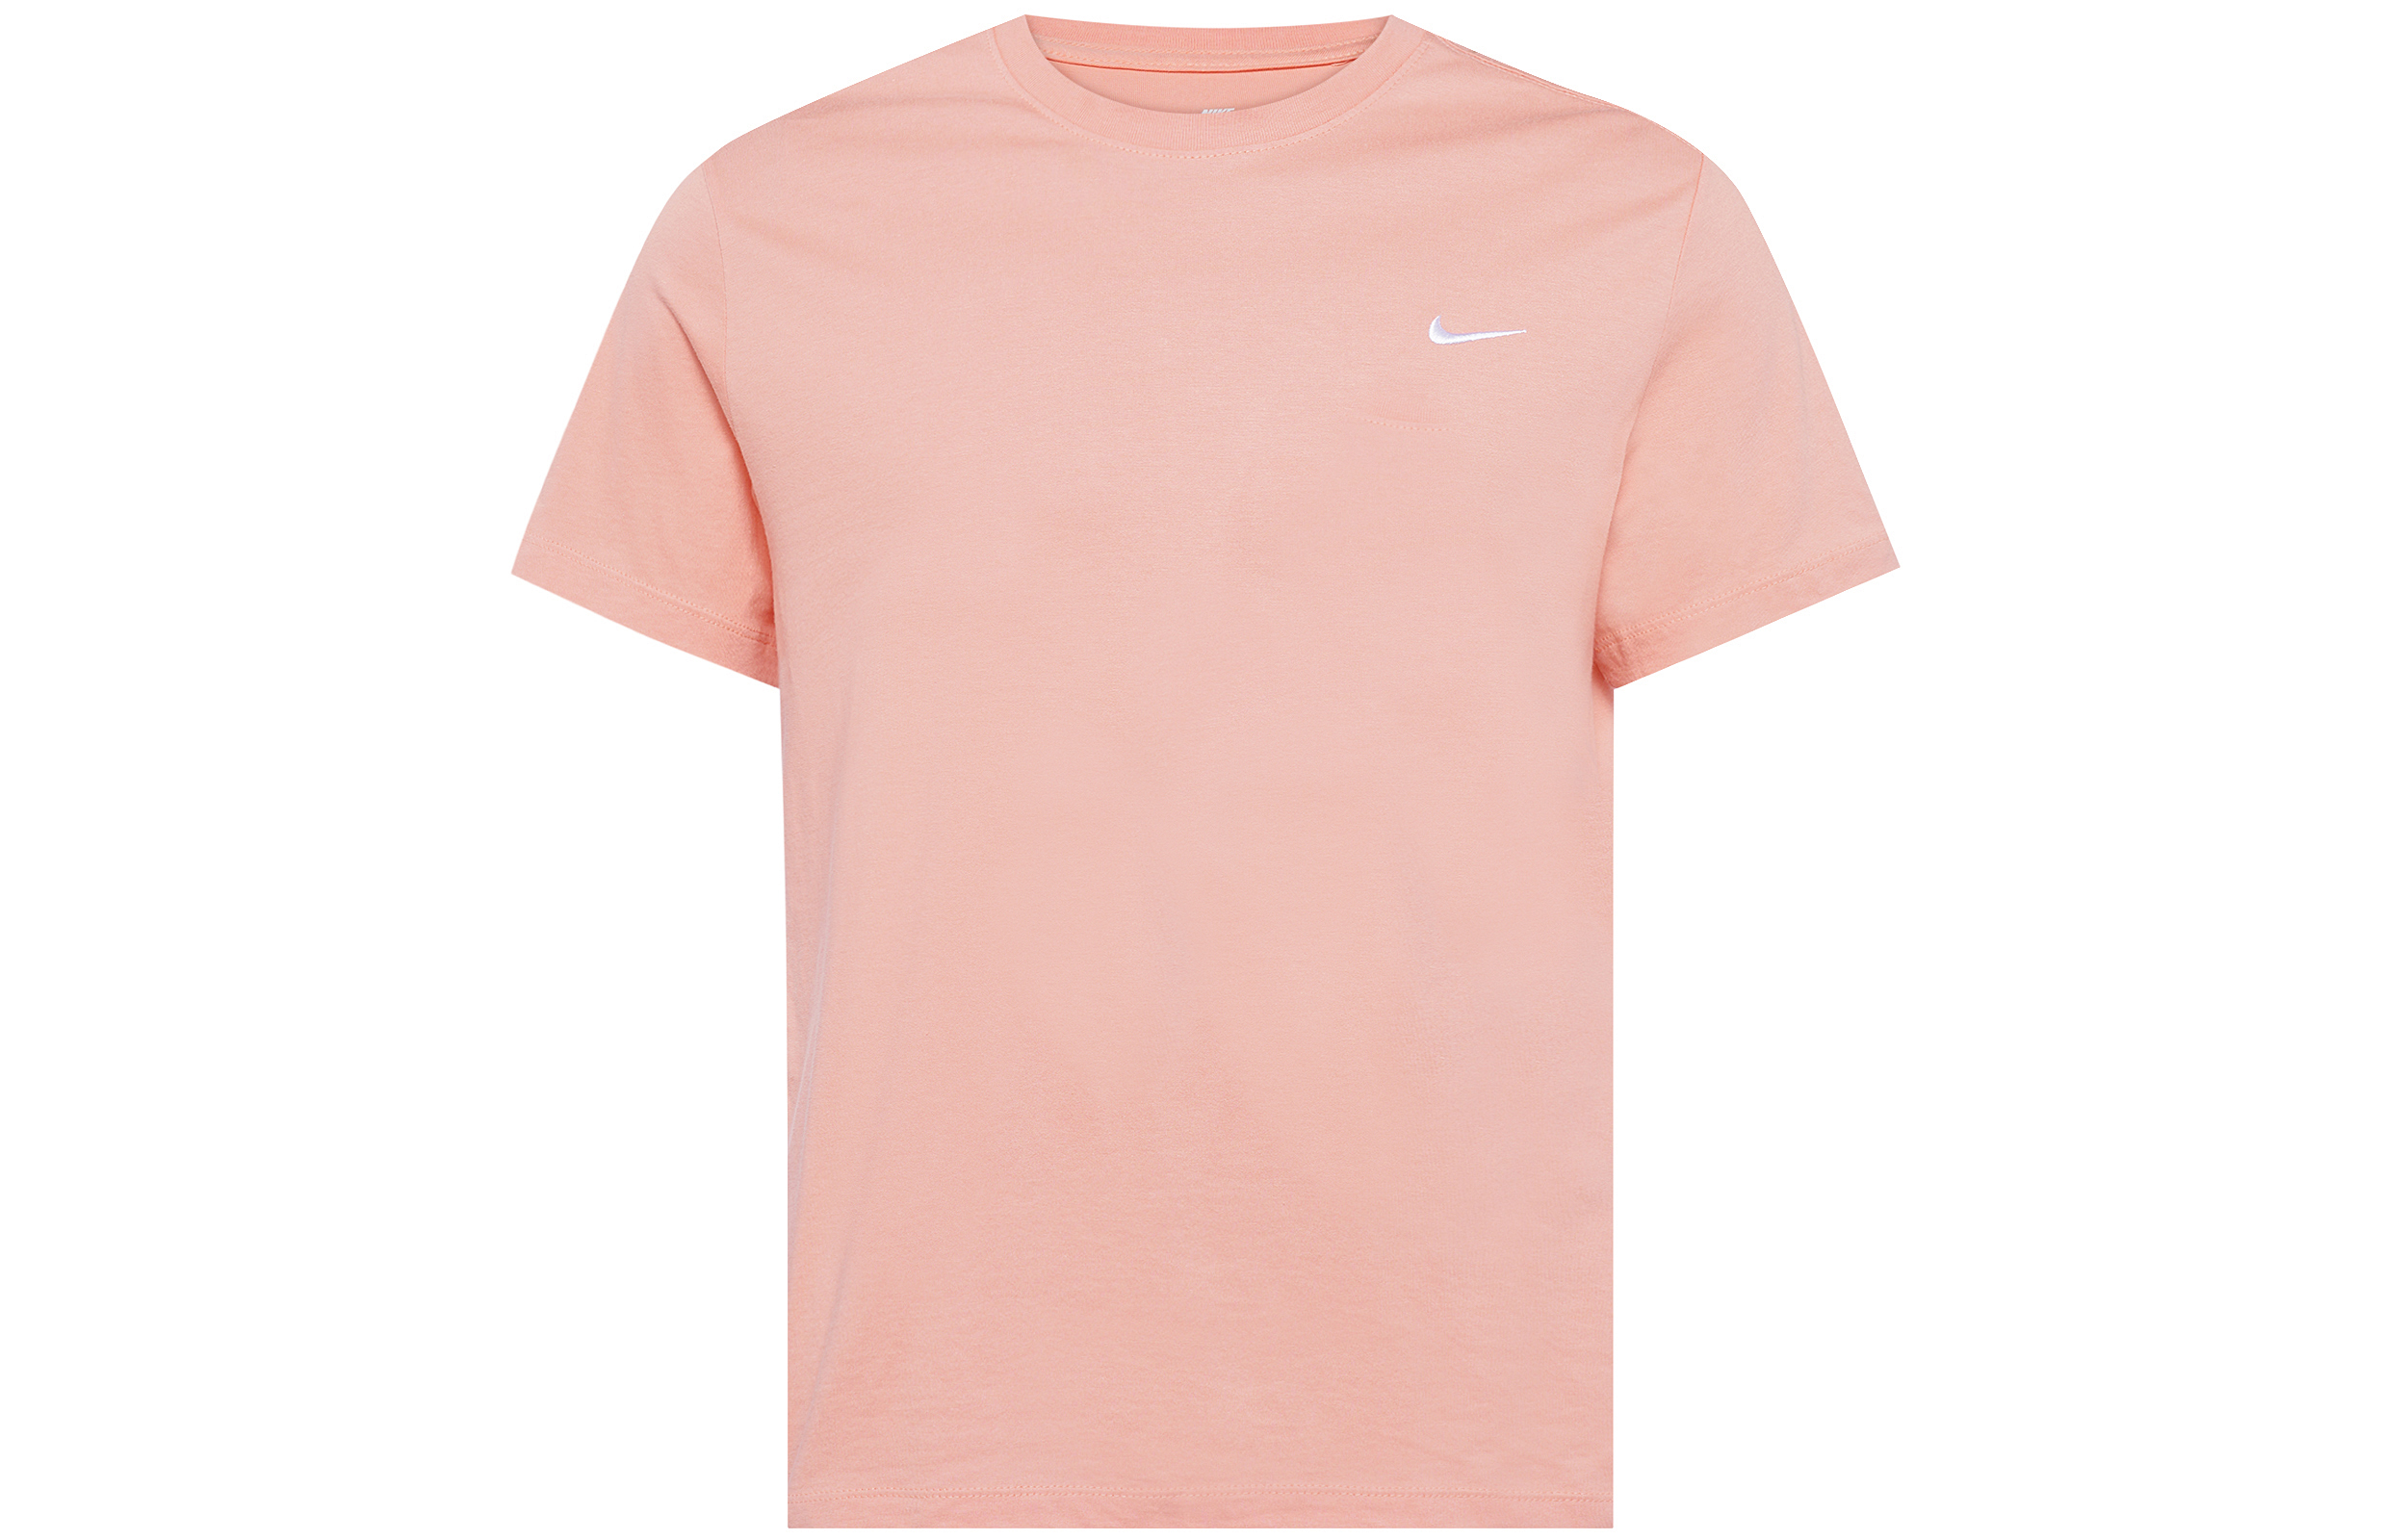 Мужская футболка Nike, розовый мужская футболка розовый делориан l белый